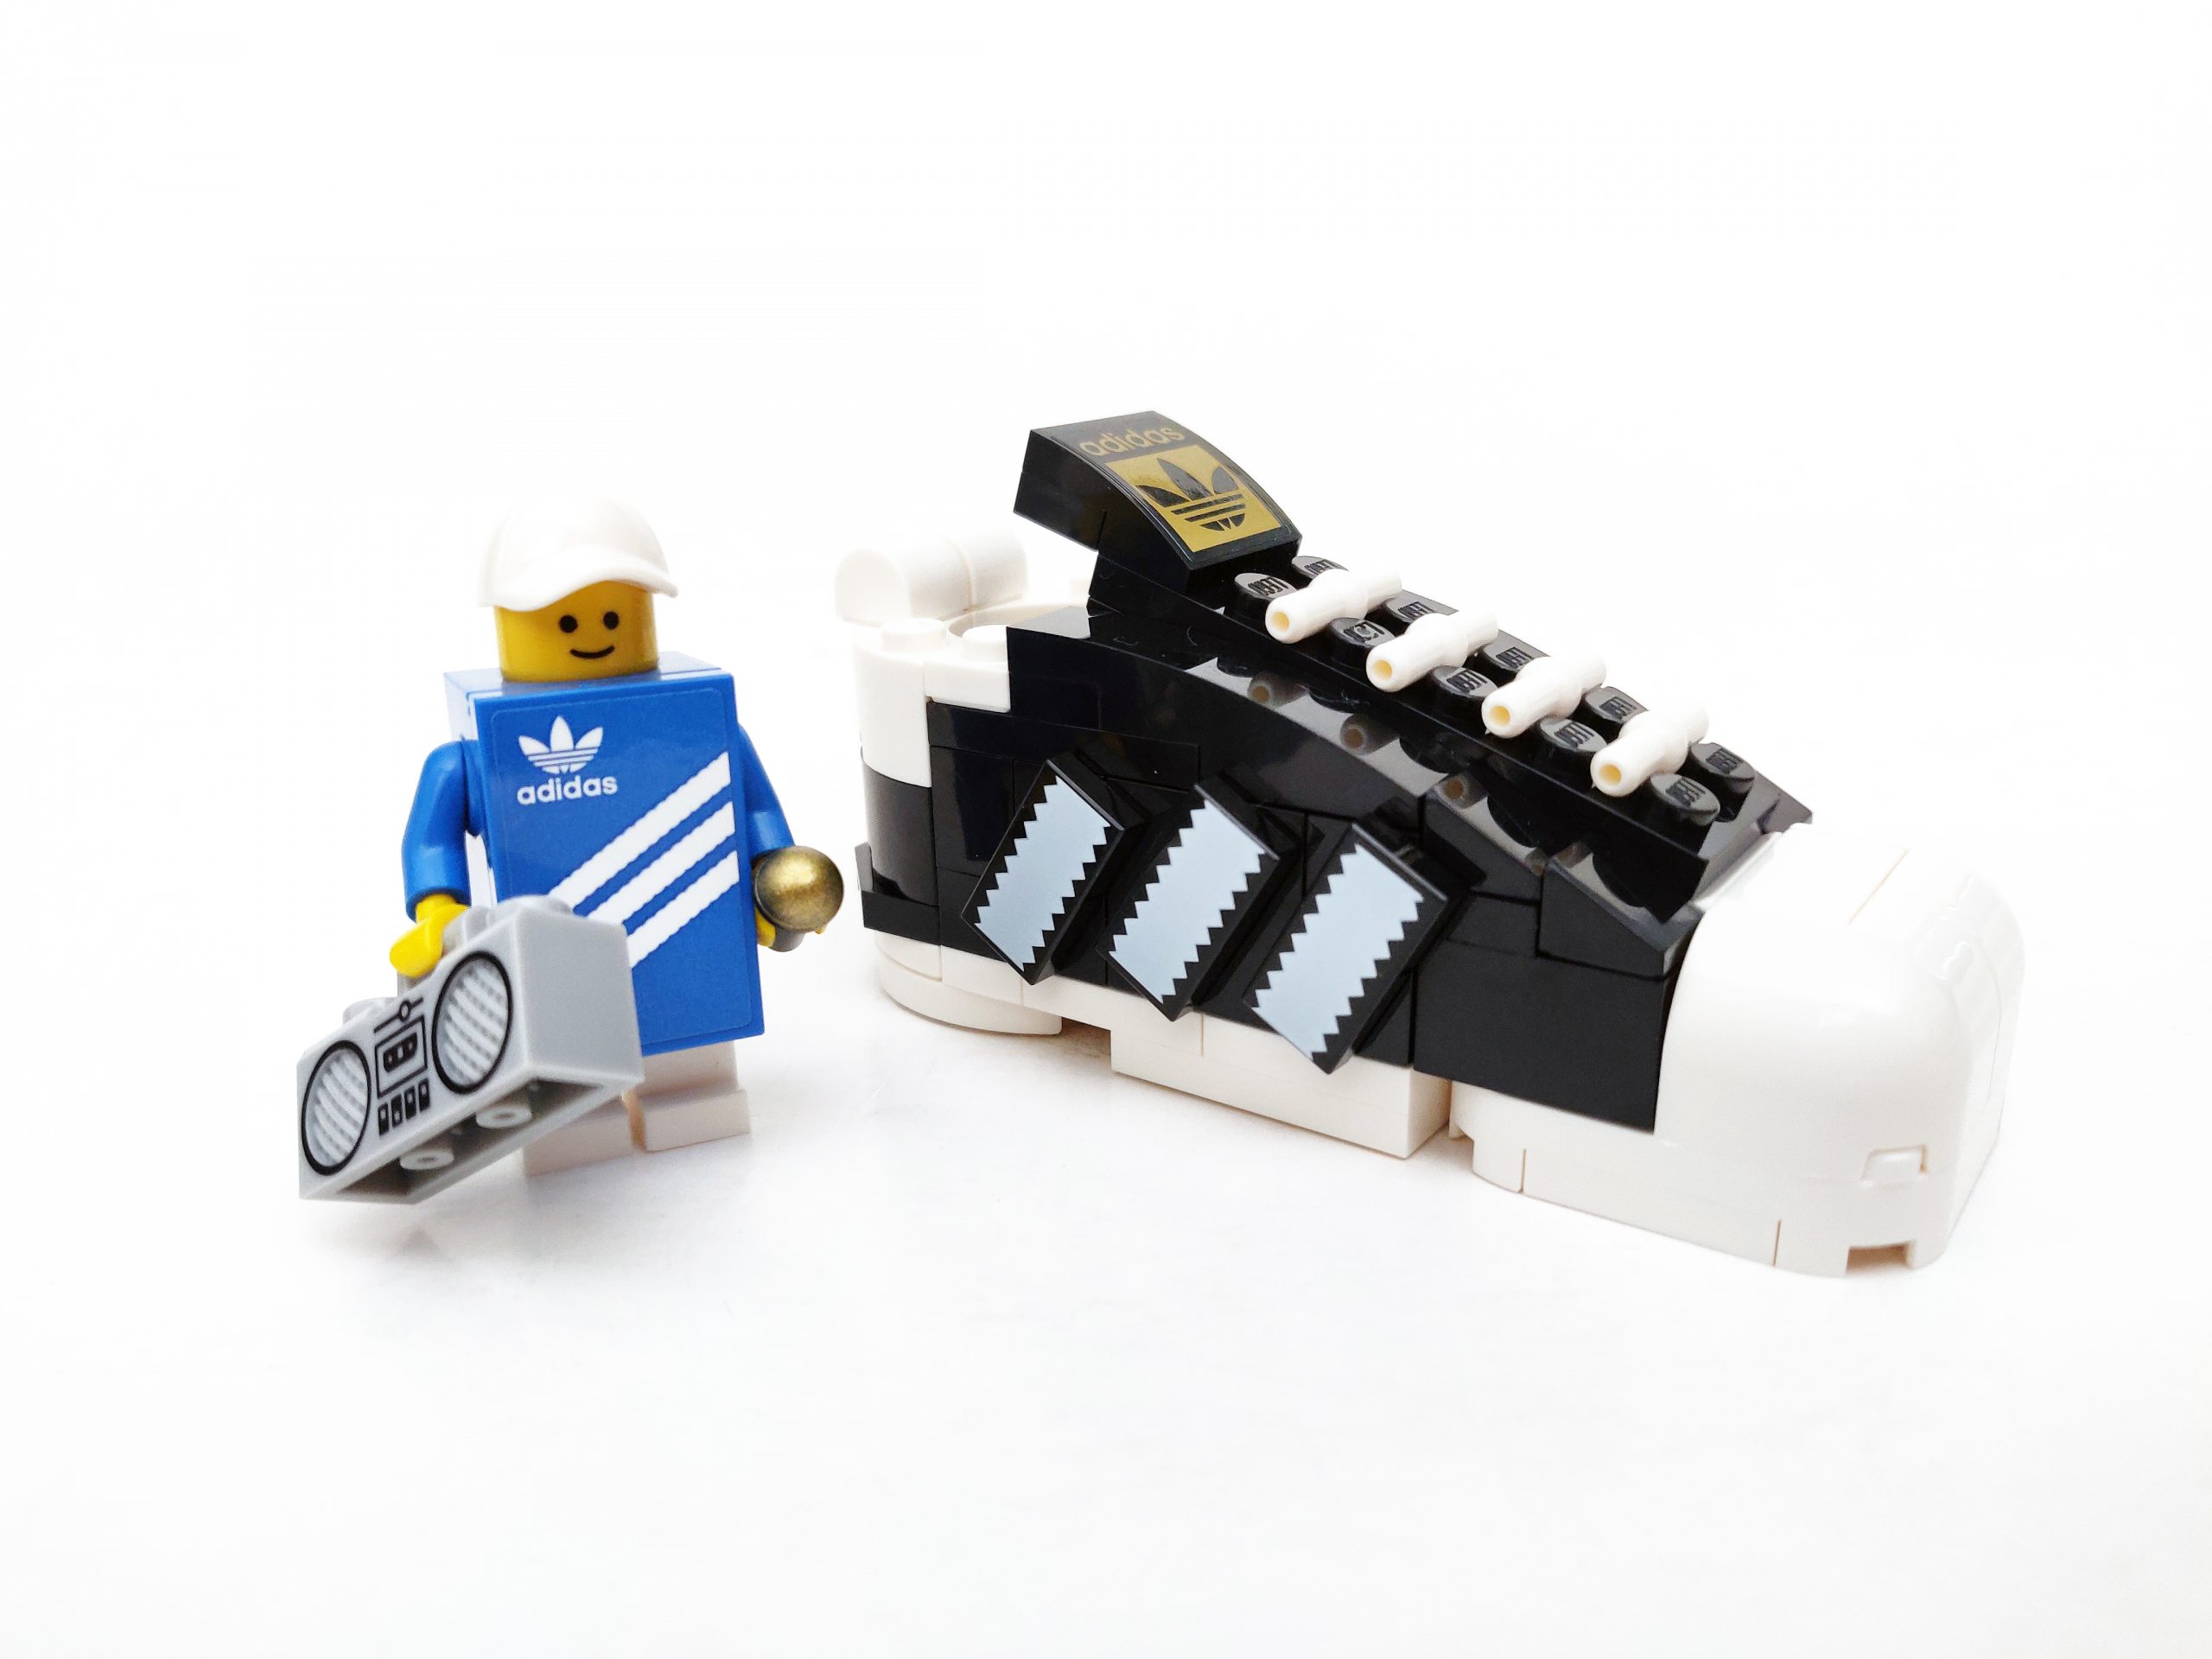 LEGO adidas Originals Superstar (40486) GWP Details - The Brick Fan